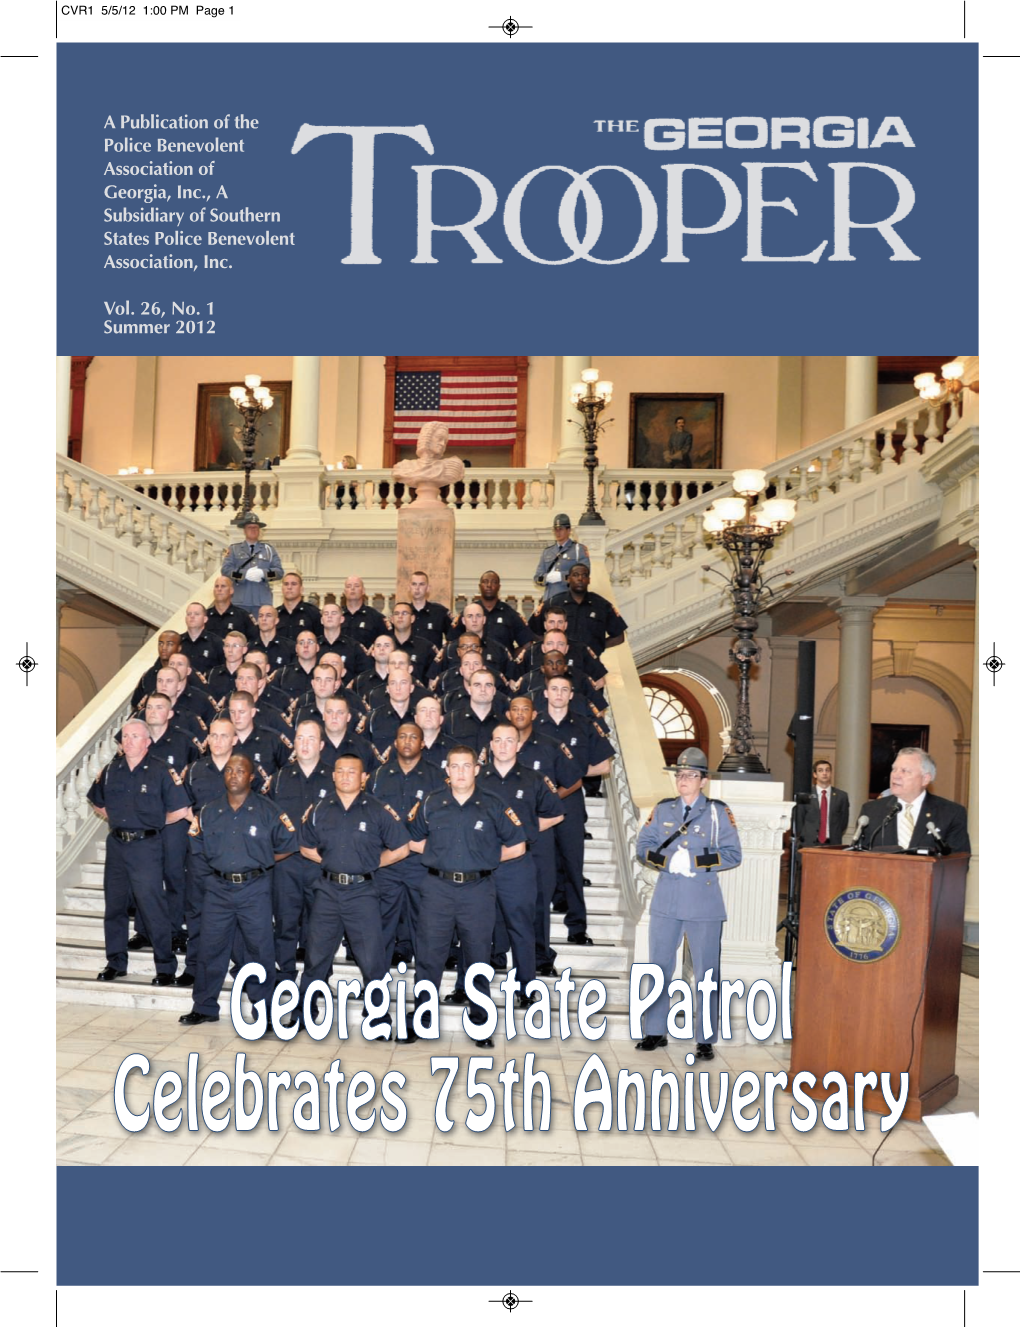 Georgia State Patrol Celebrates 75Th Anniversary 001-012 Editorial 5/5/12 1:14 Pm Page 3